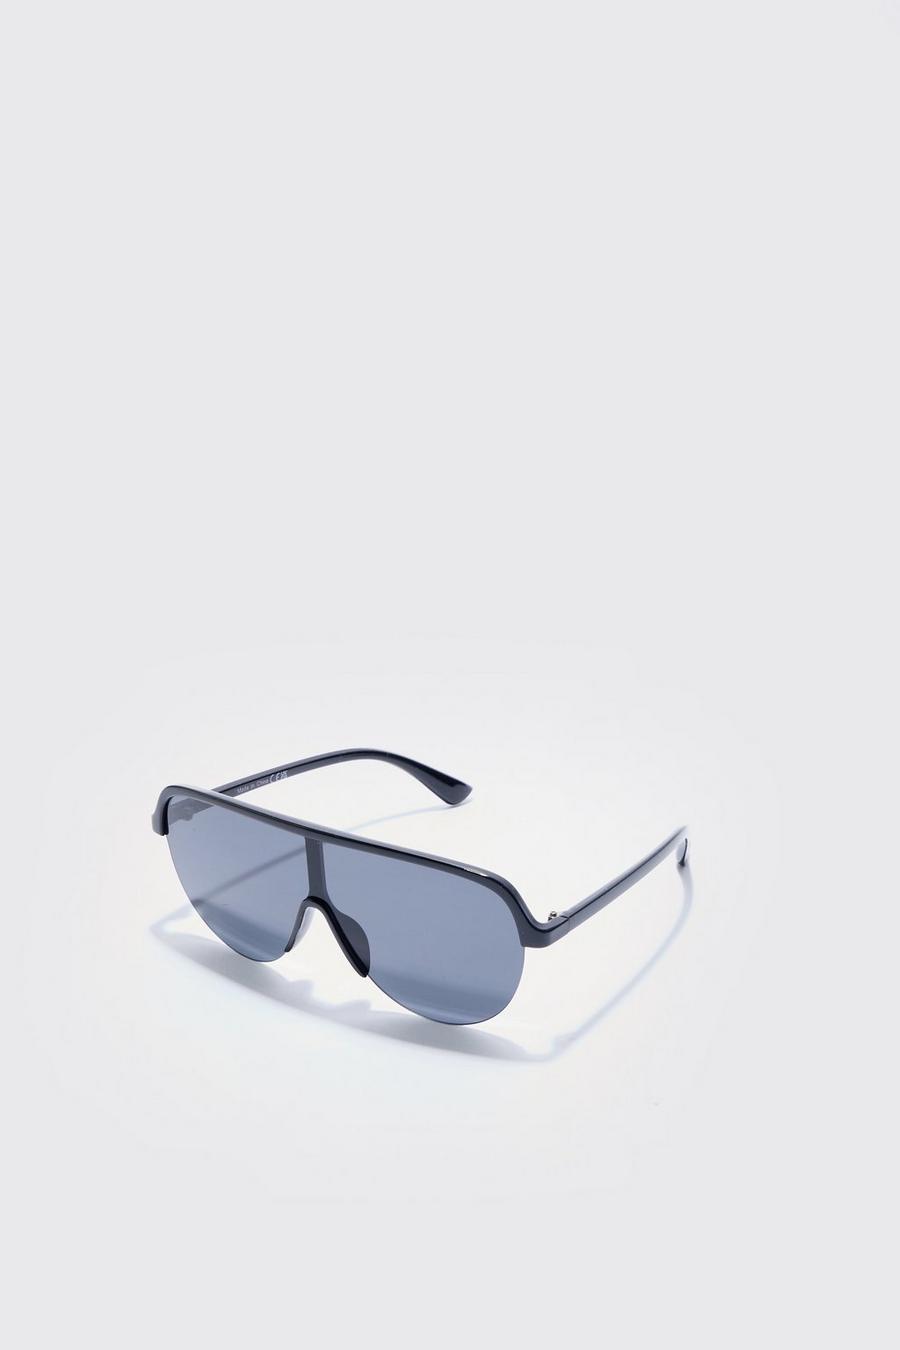 Black Shield Racer Sunglasses